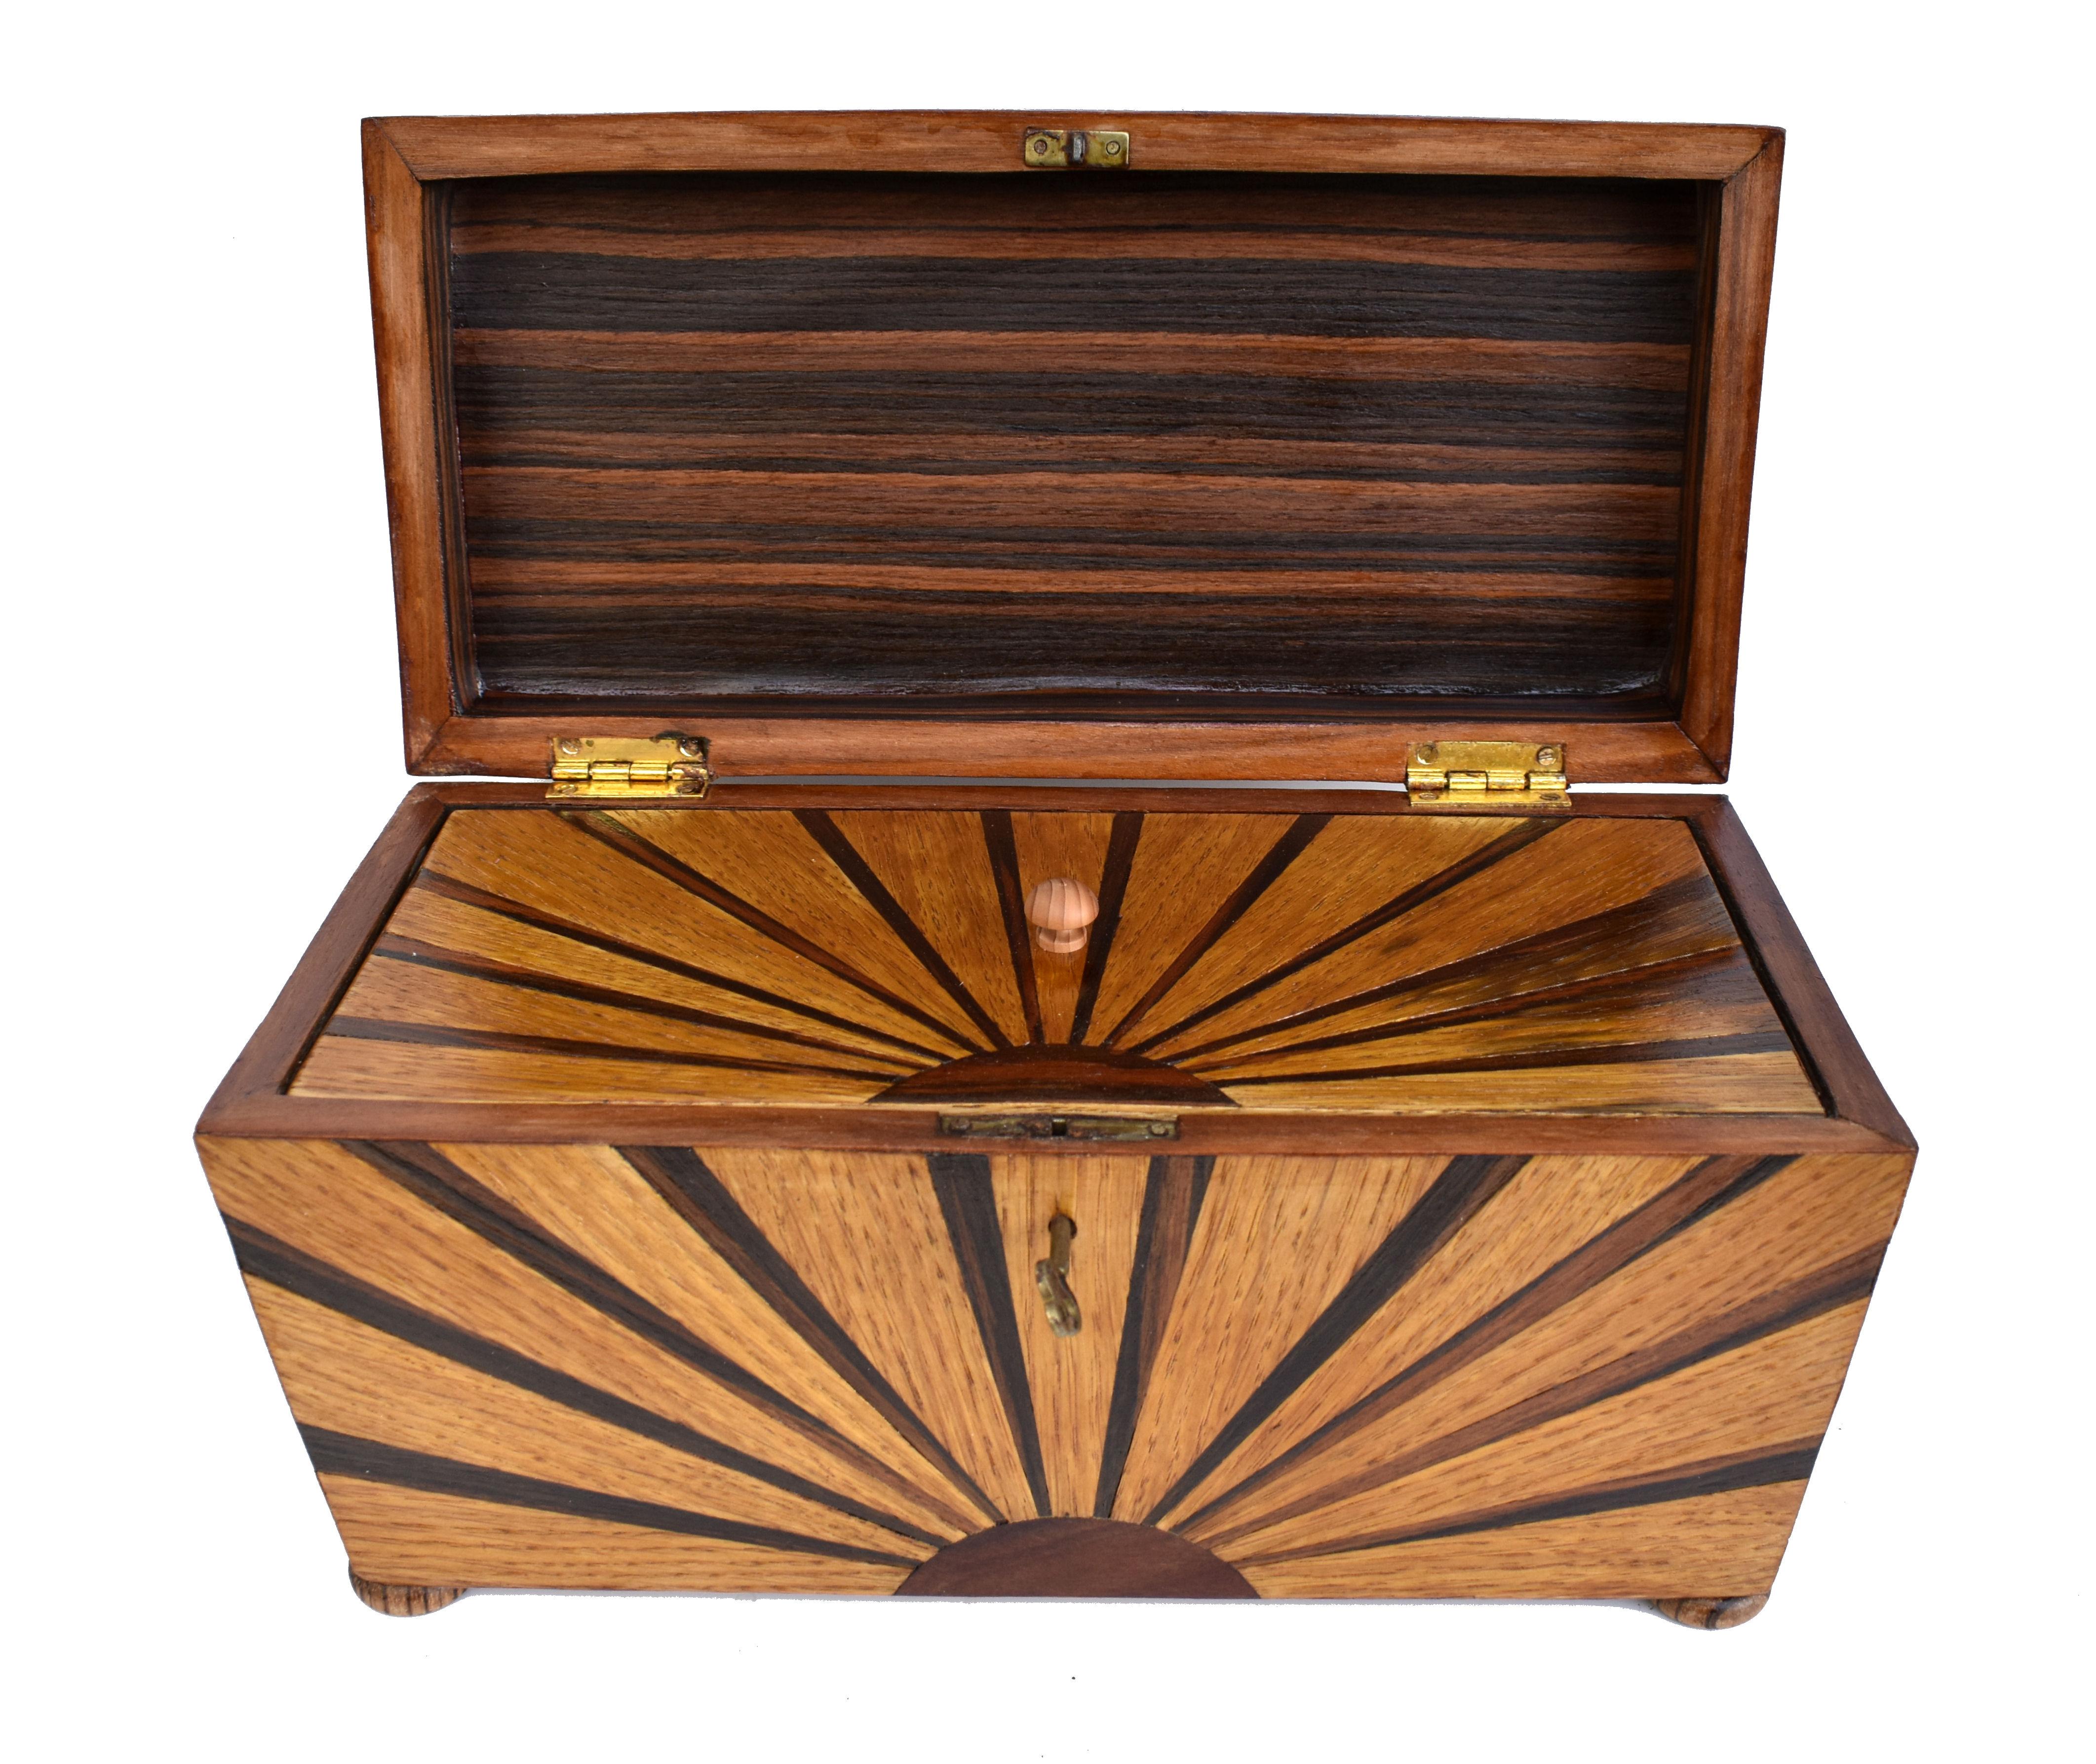 English Art Deco Inlaid 'Sunray' Inlaid Tea Caddy Box with Key, c1930 For Sale